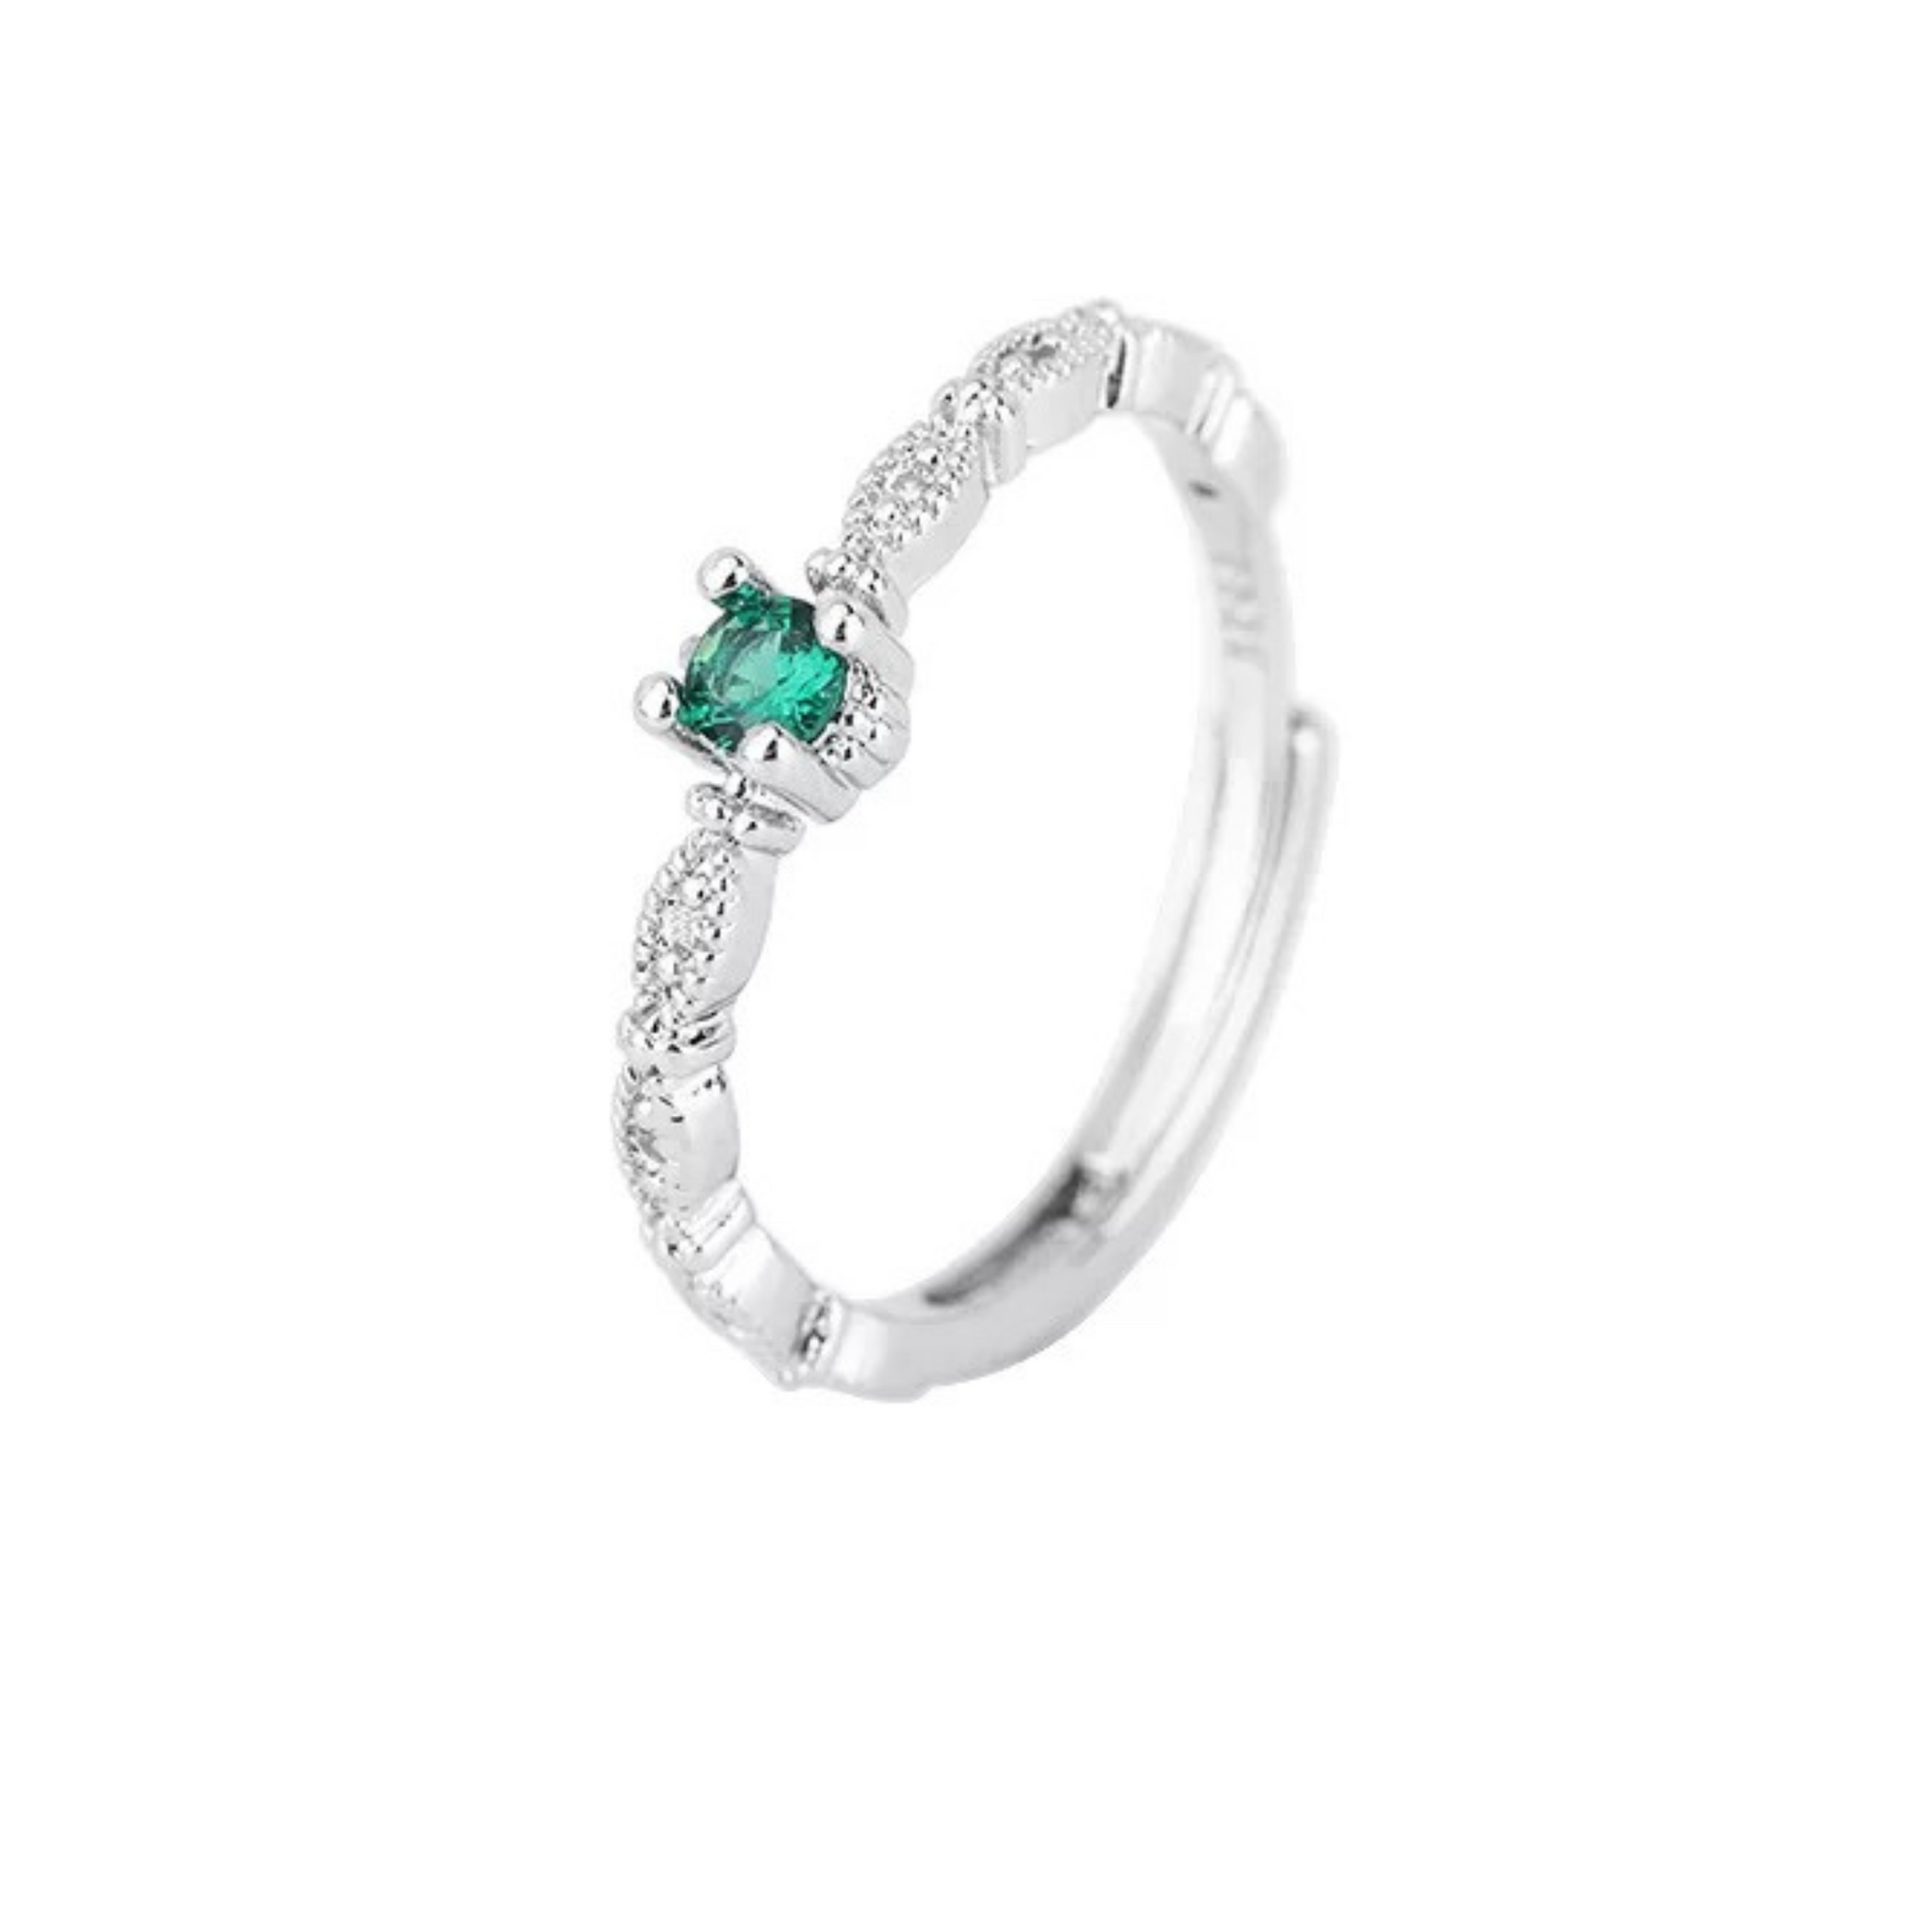 Nova ring i sølv.  Elegant ring med de fineste detaljer samt en flot grøn zircon sten.  Materiale: S925 sterling sølv, zircon. 100% nikkelfri. Mål: Justerbar, zircon-stenen er 3MM